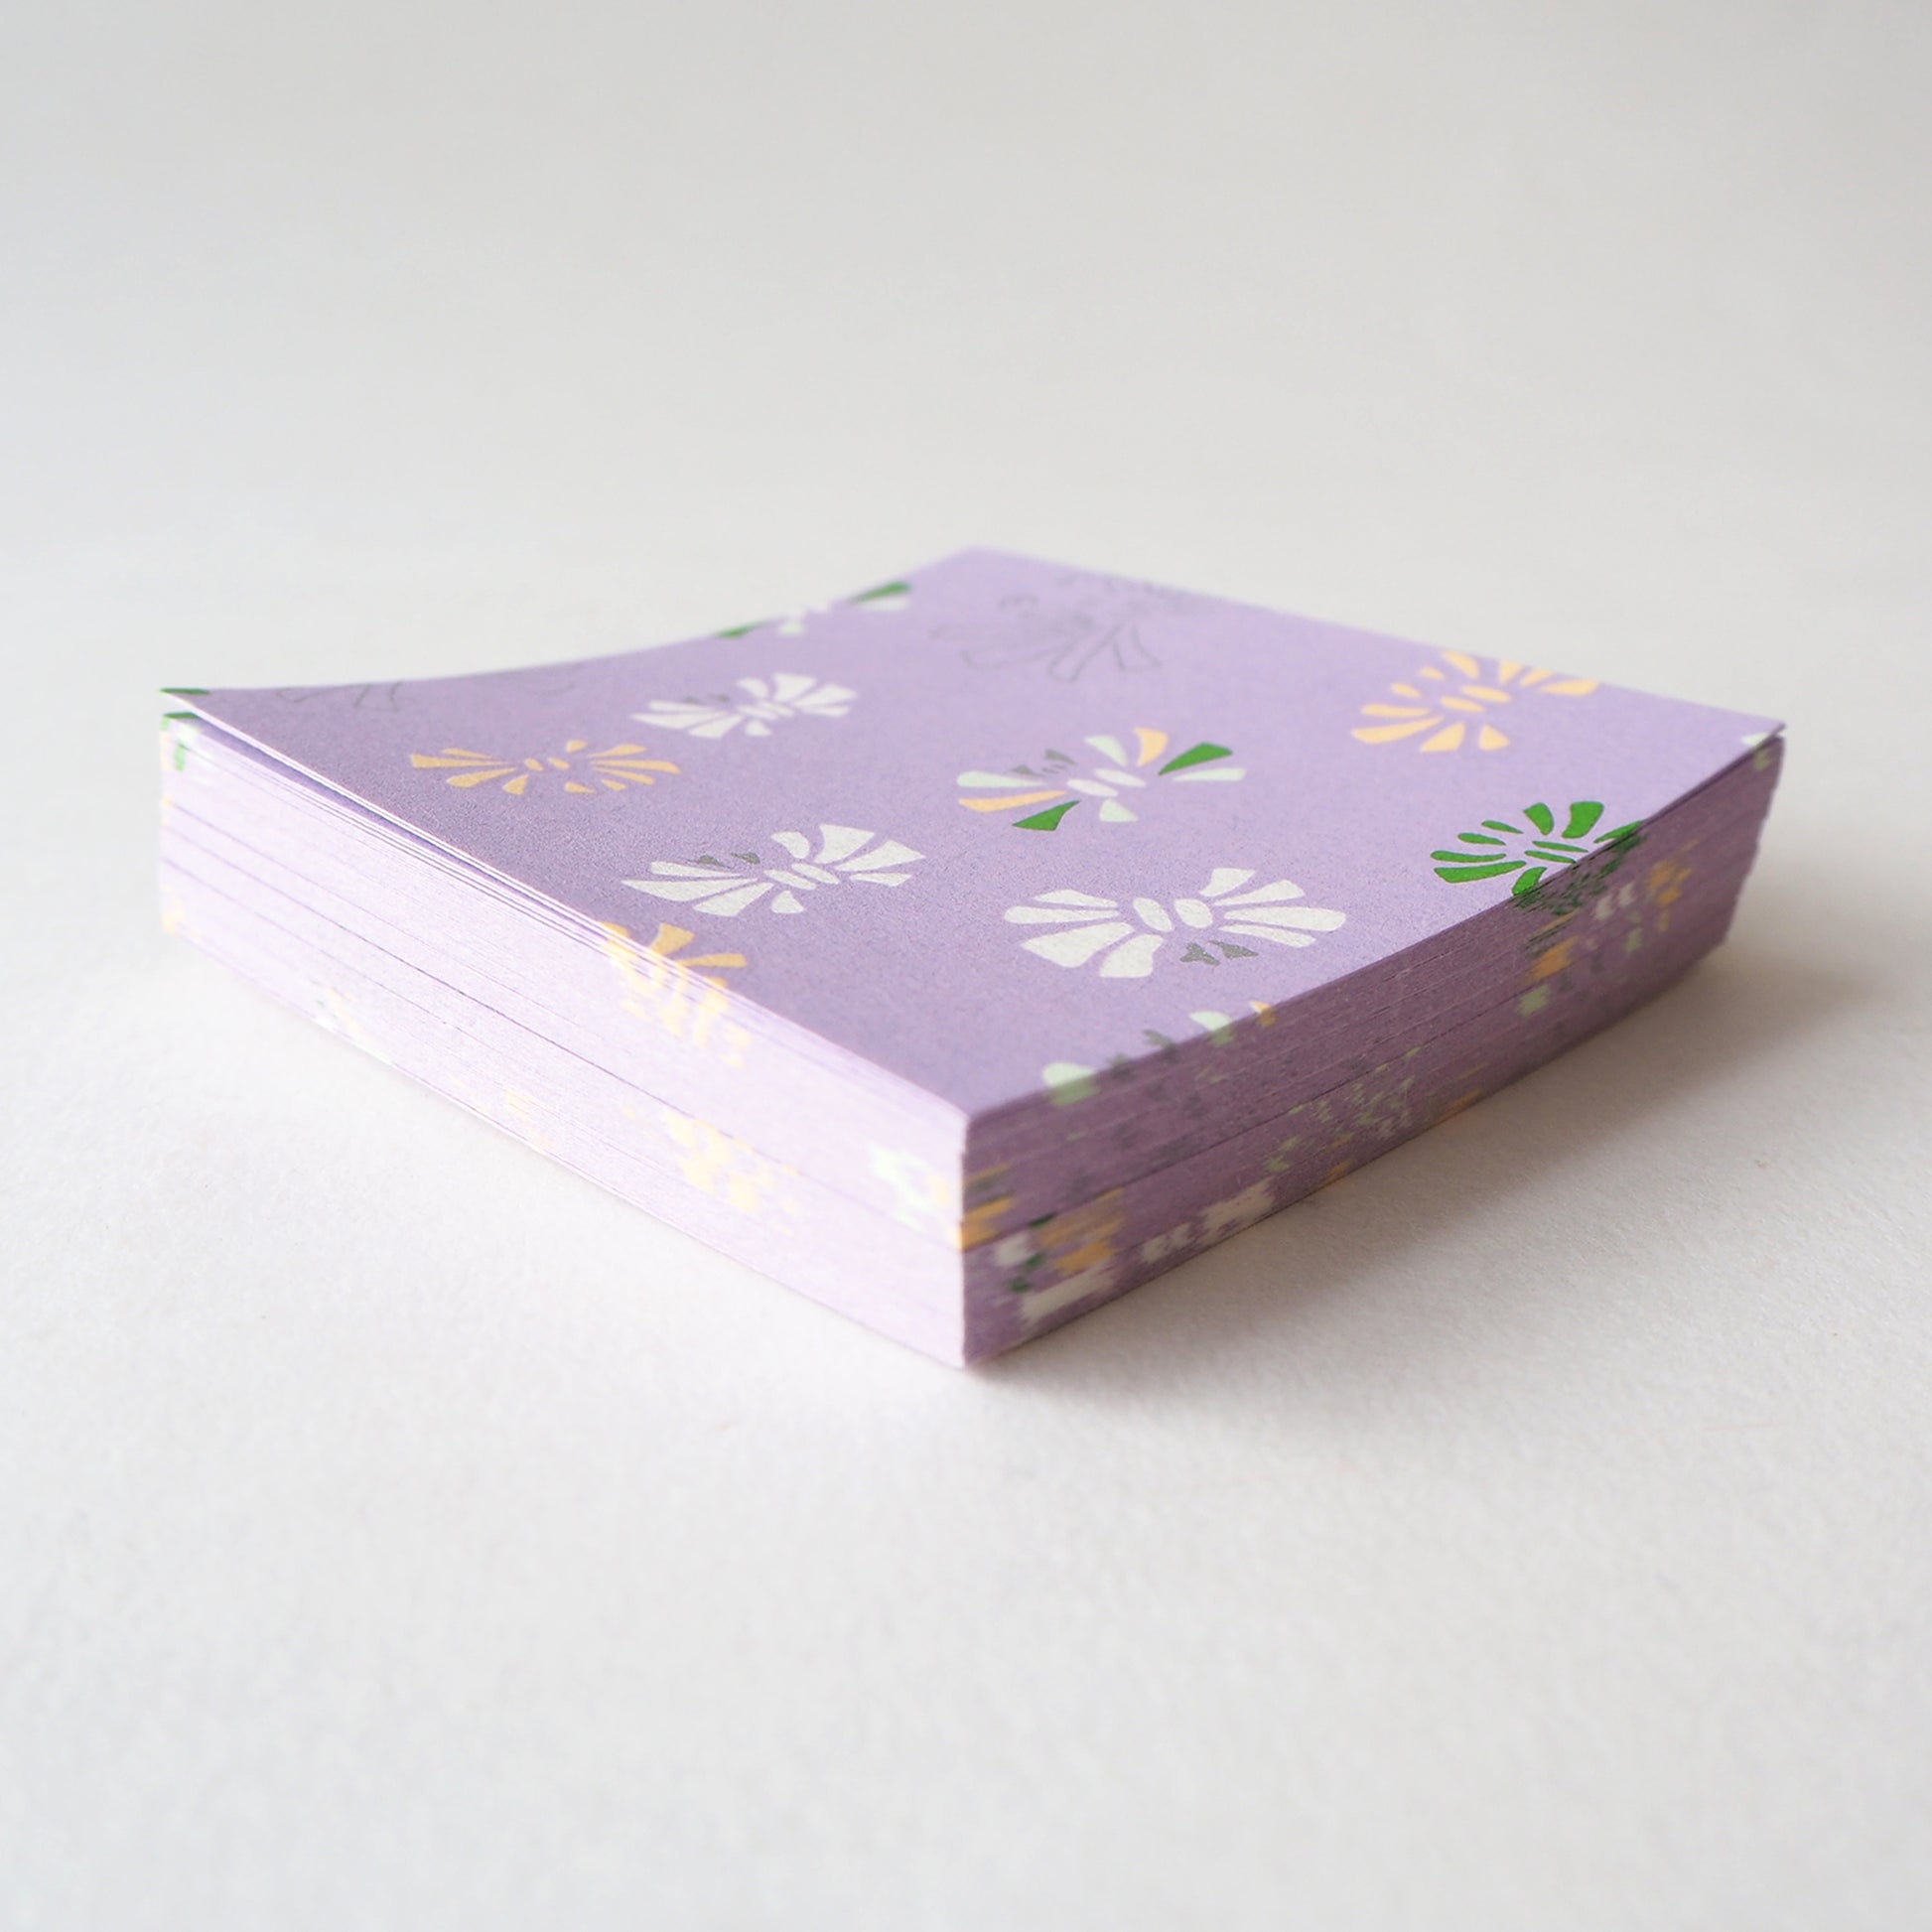 Pack of 100 Sheets 7x7cm Yuzen Washi Origami Paper HZ-173 - Ribbons Lavender - washi paper - Lavender Home London